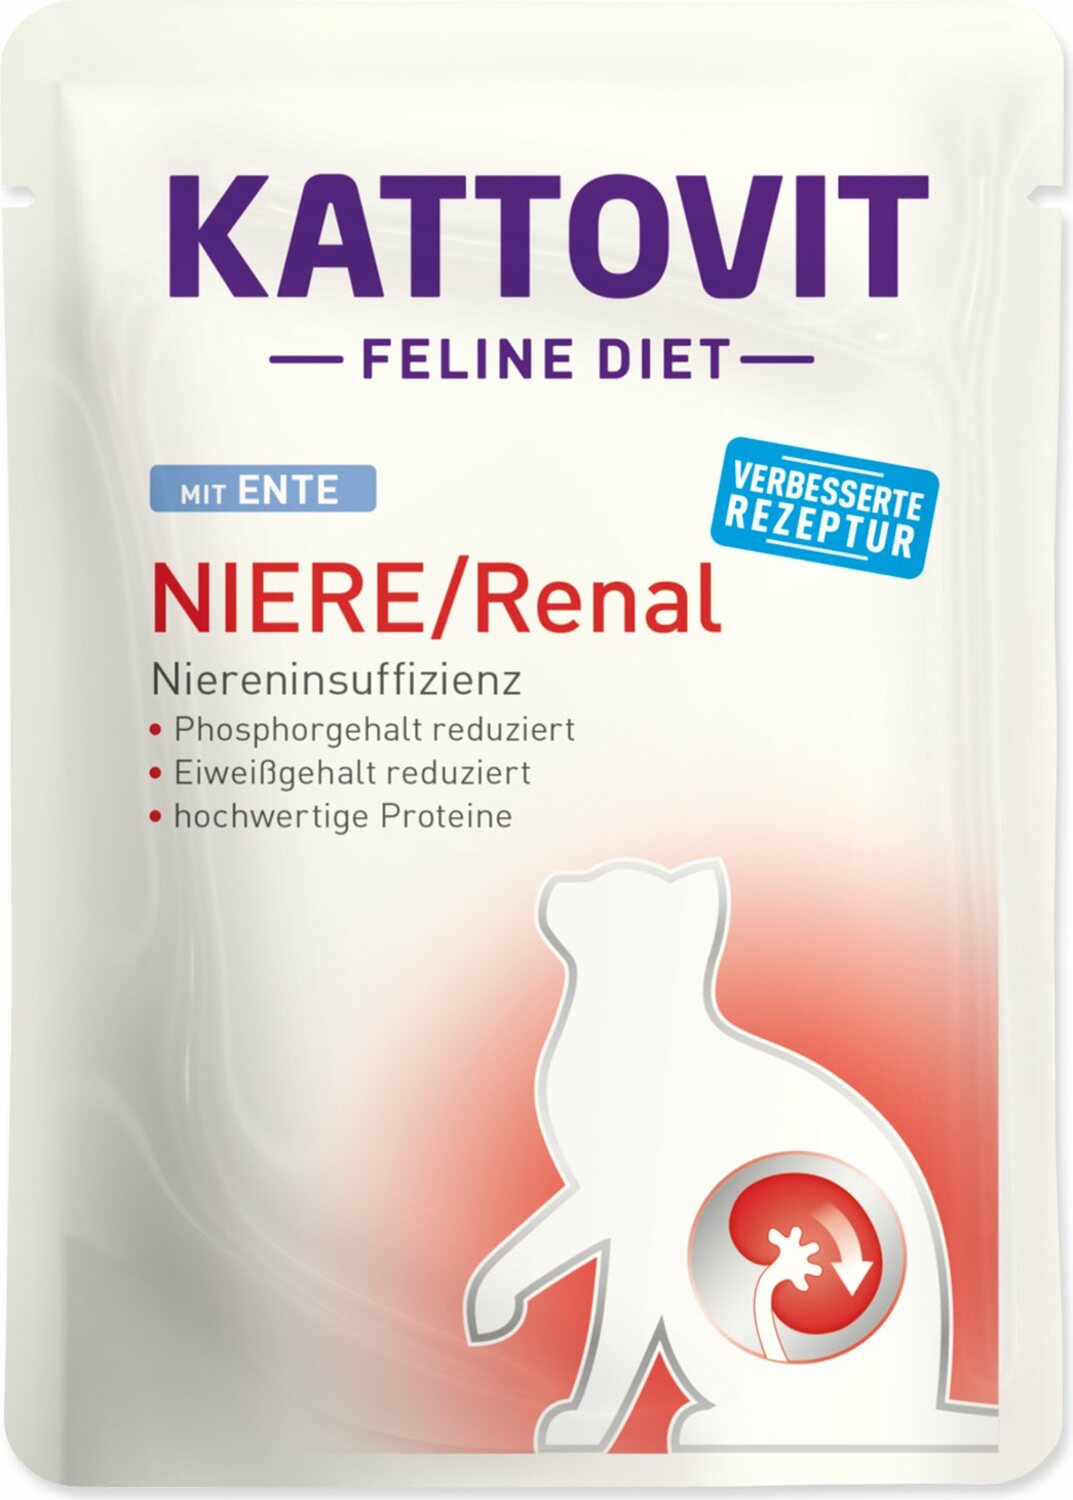 Kapsička Kattovit Kidney/Renal kachna 85g